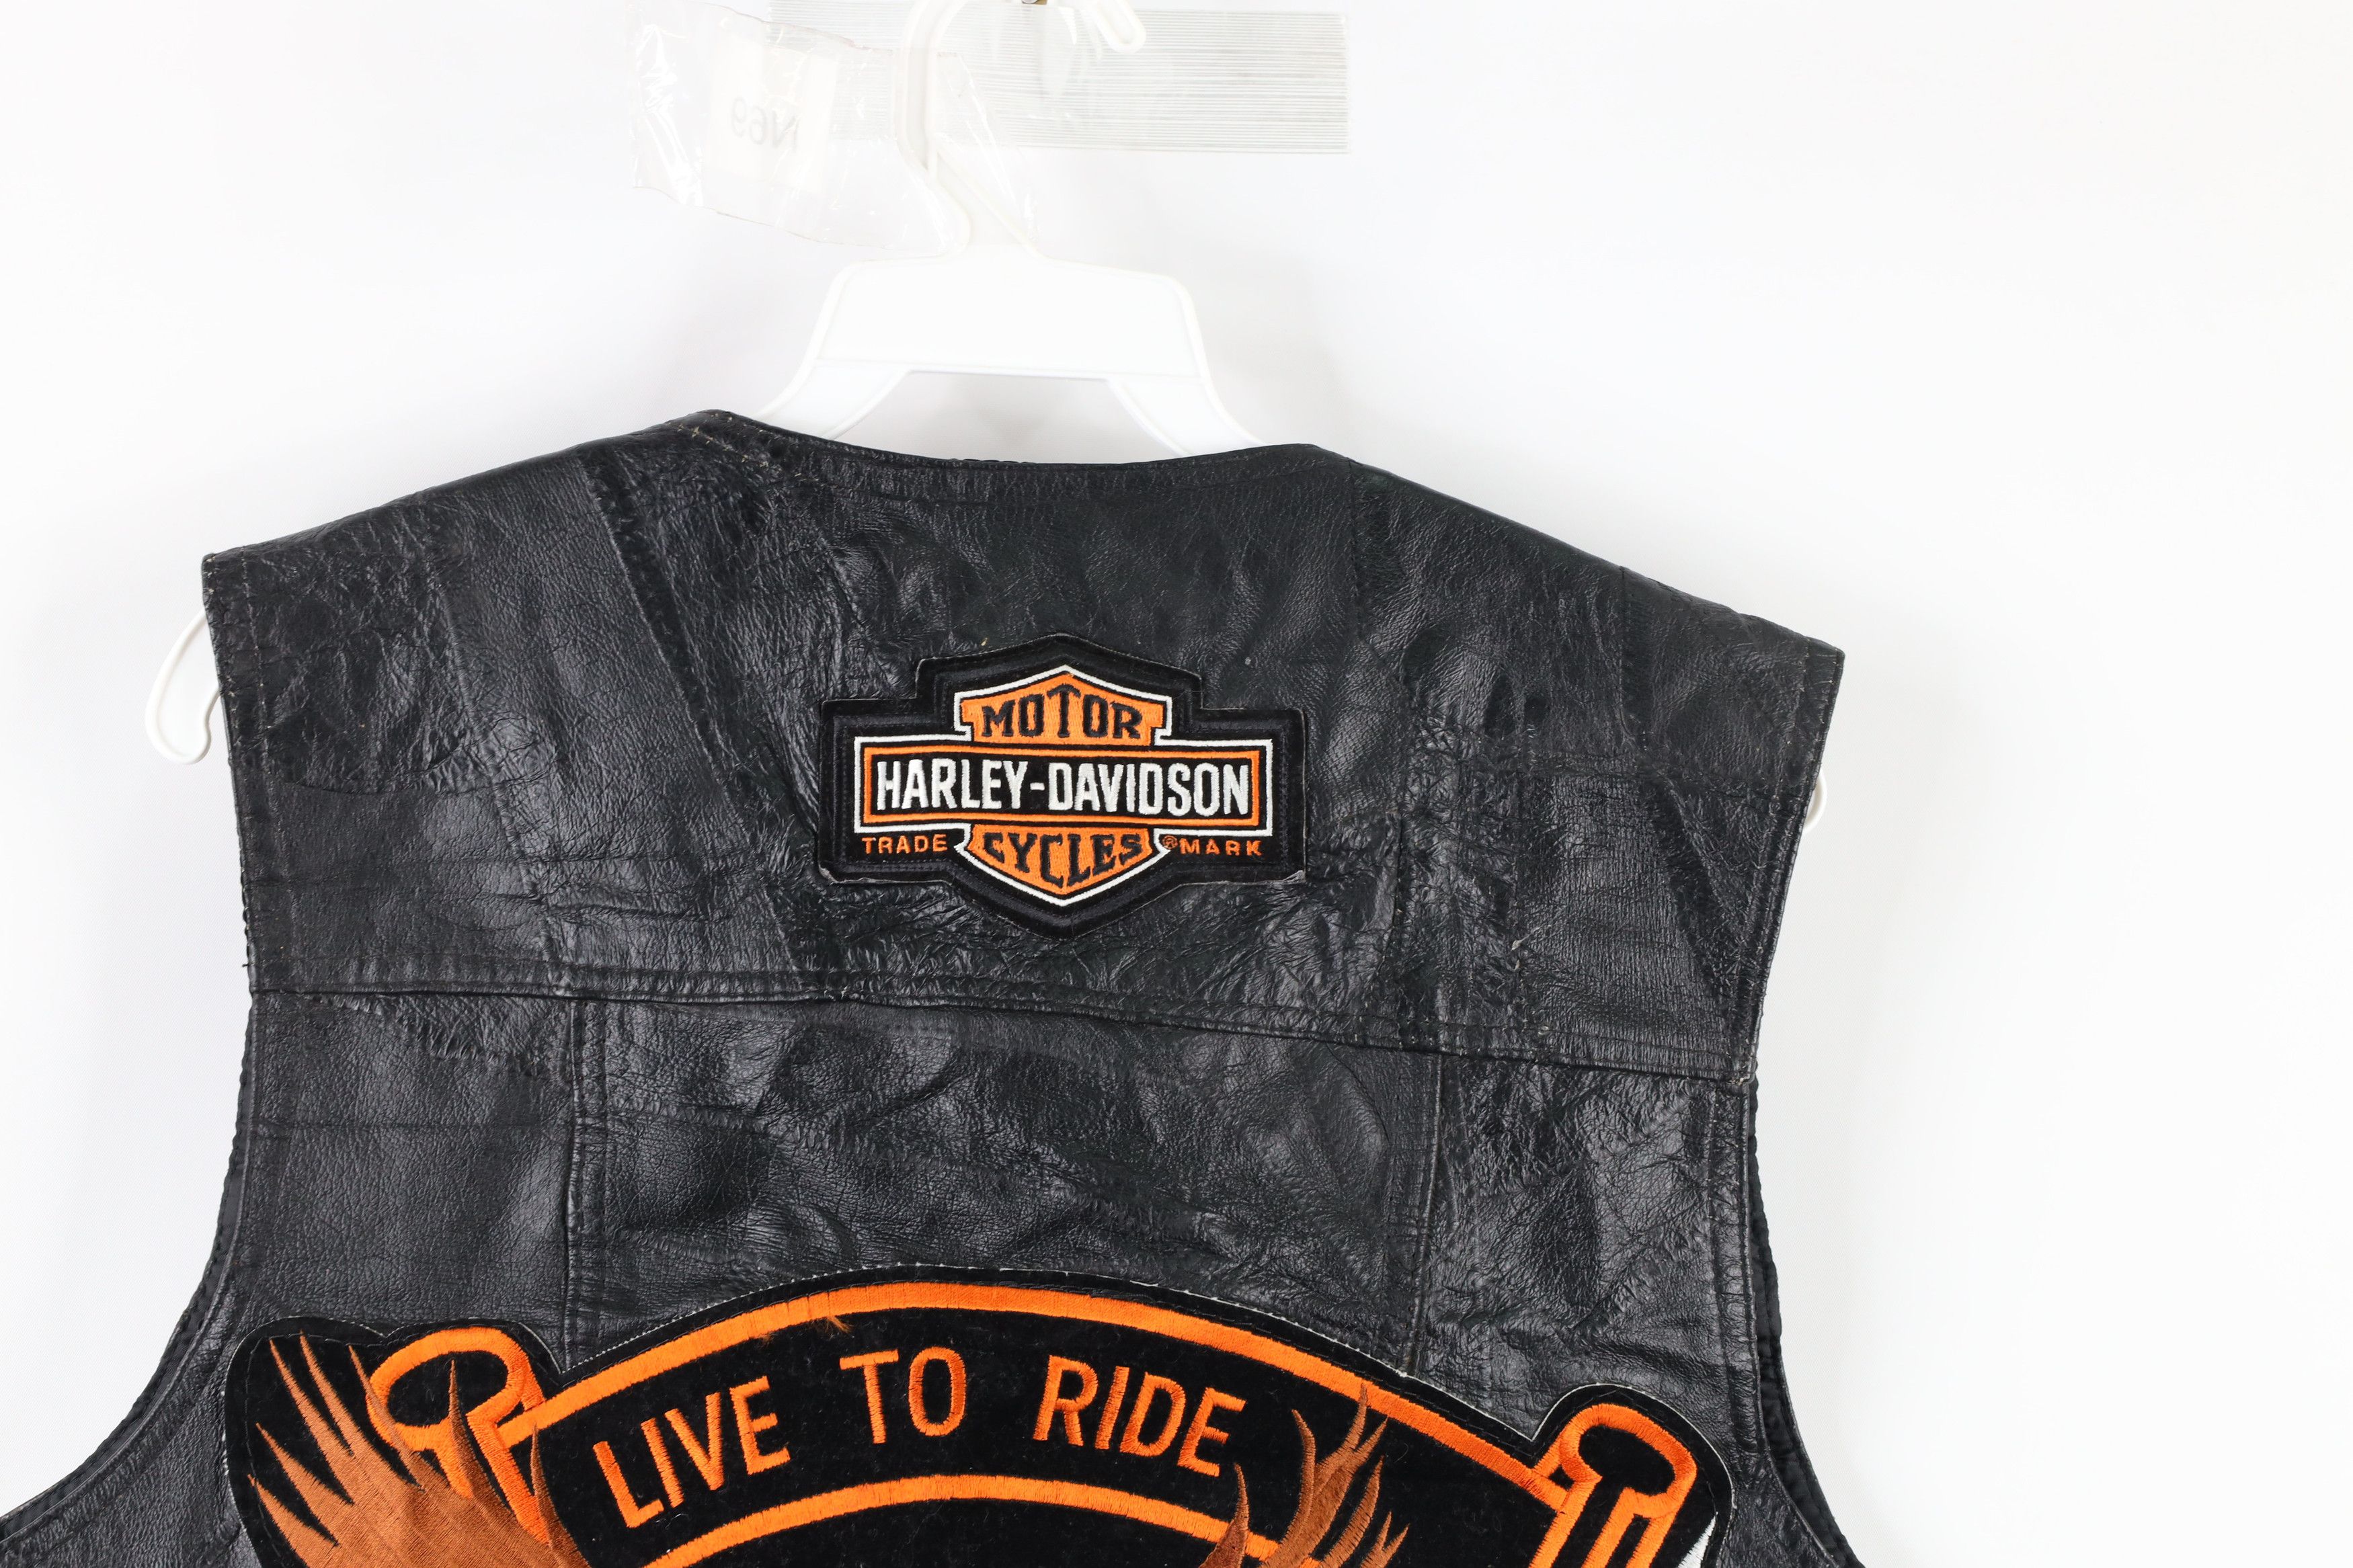 Vintage Vintage Biketoberfest Harley Davidson Leather Vest Black Size US M / EU 48-50 / 2 - 8 Thumbnail